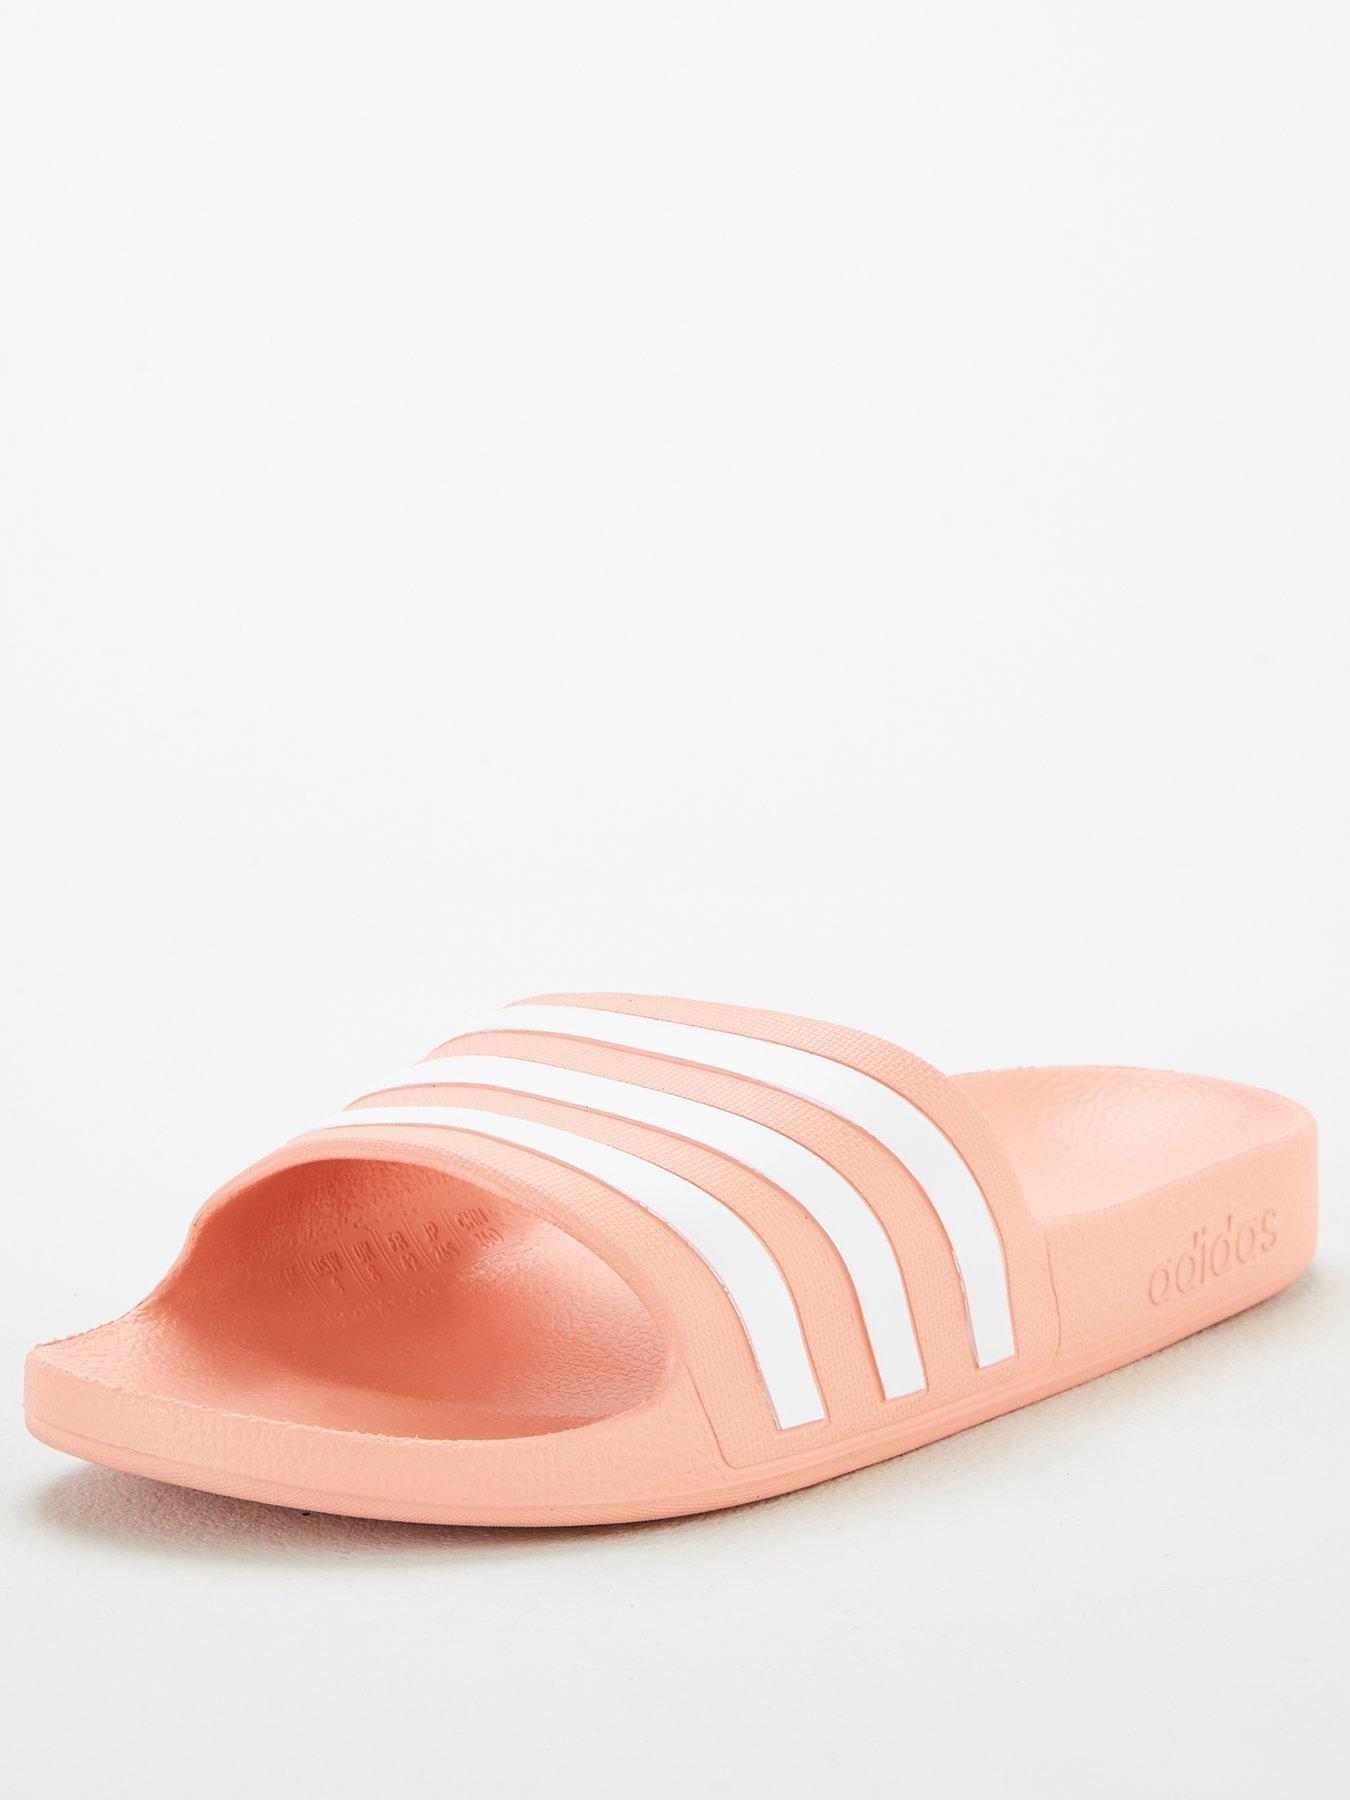 pink sliders adidas